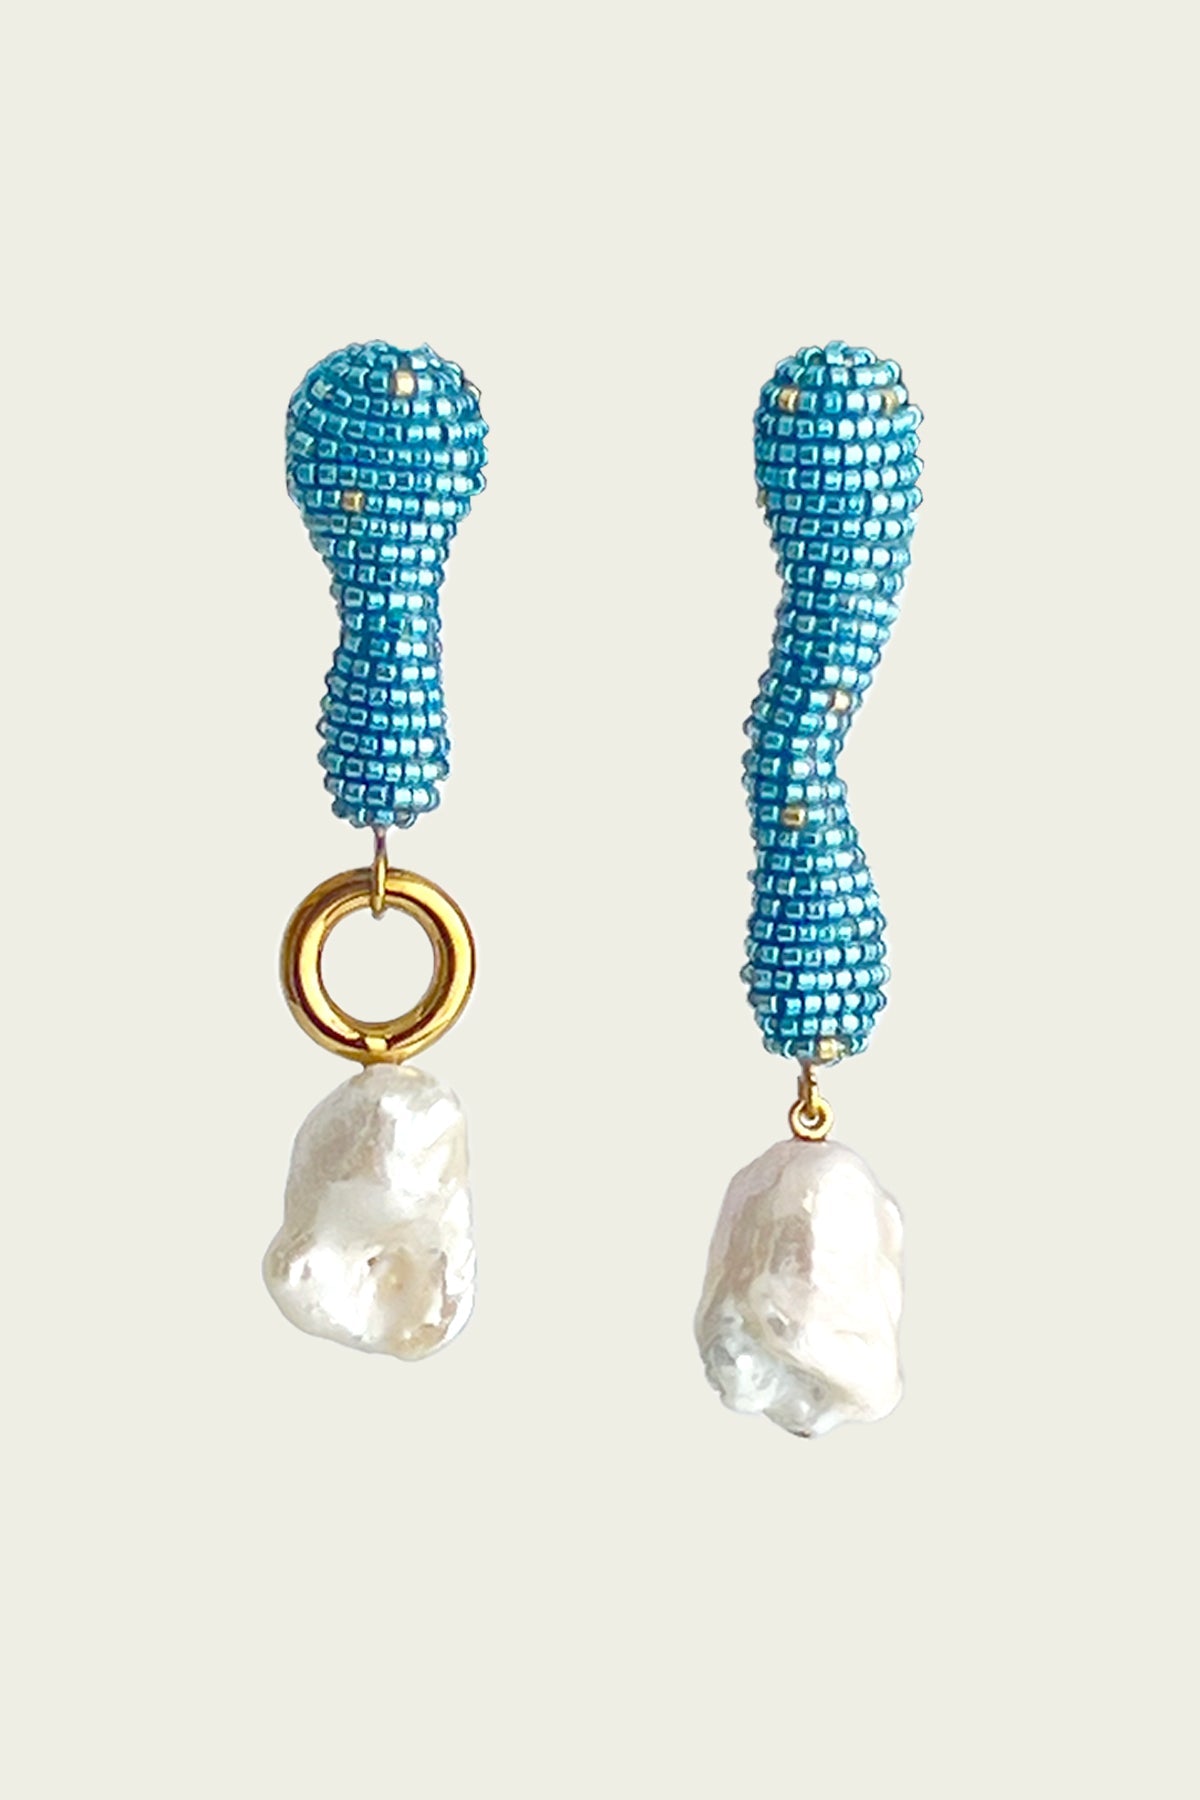 Finito Pearled Earrings in Caribbean Blue - shop-olivia.com